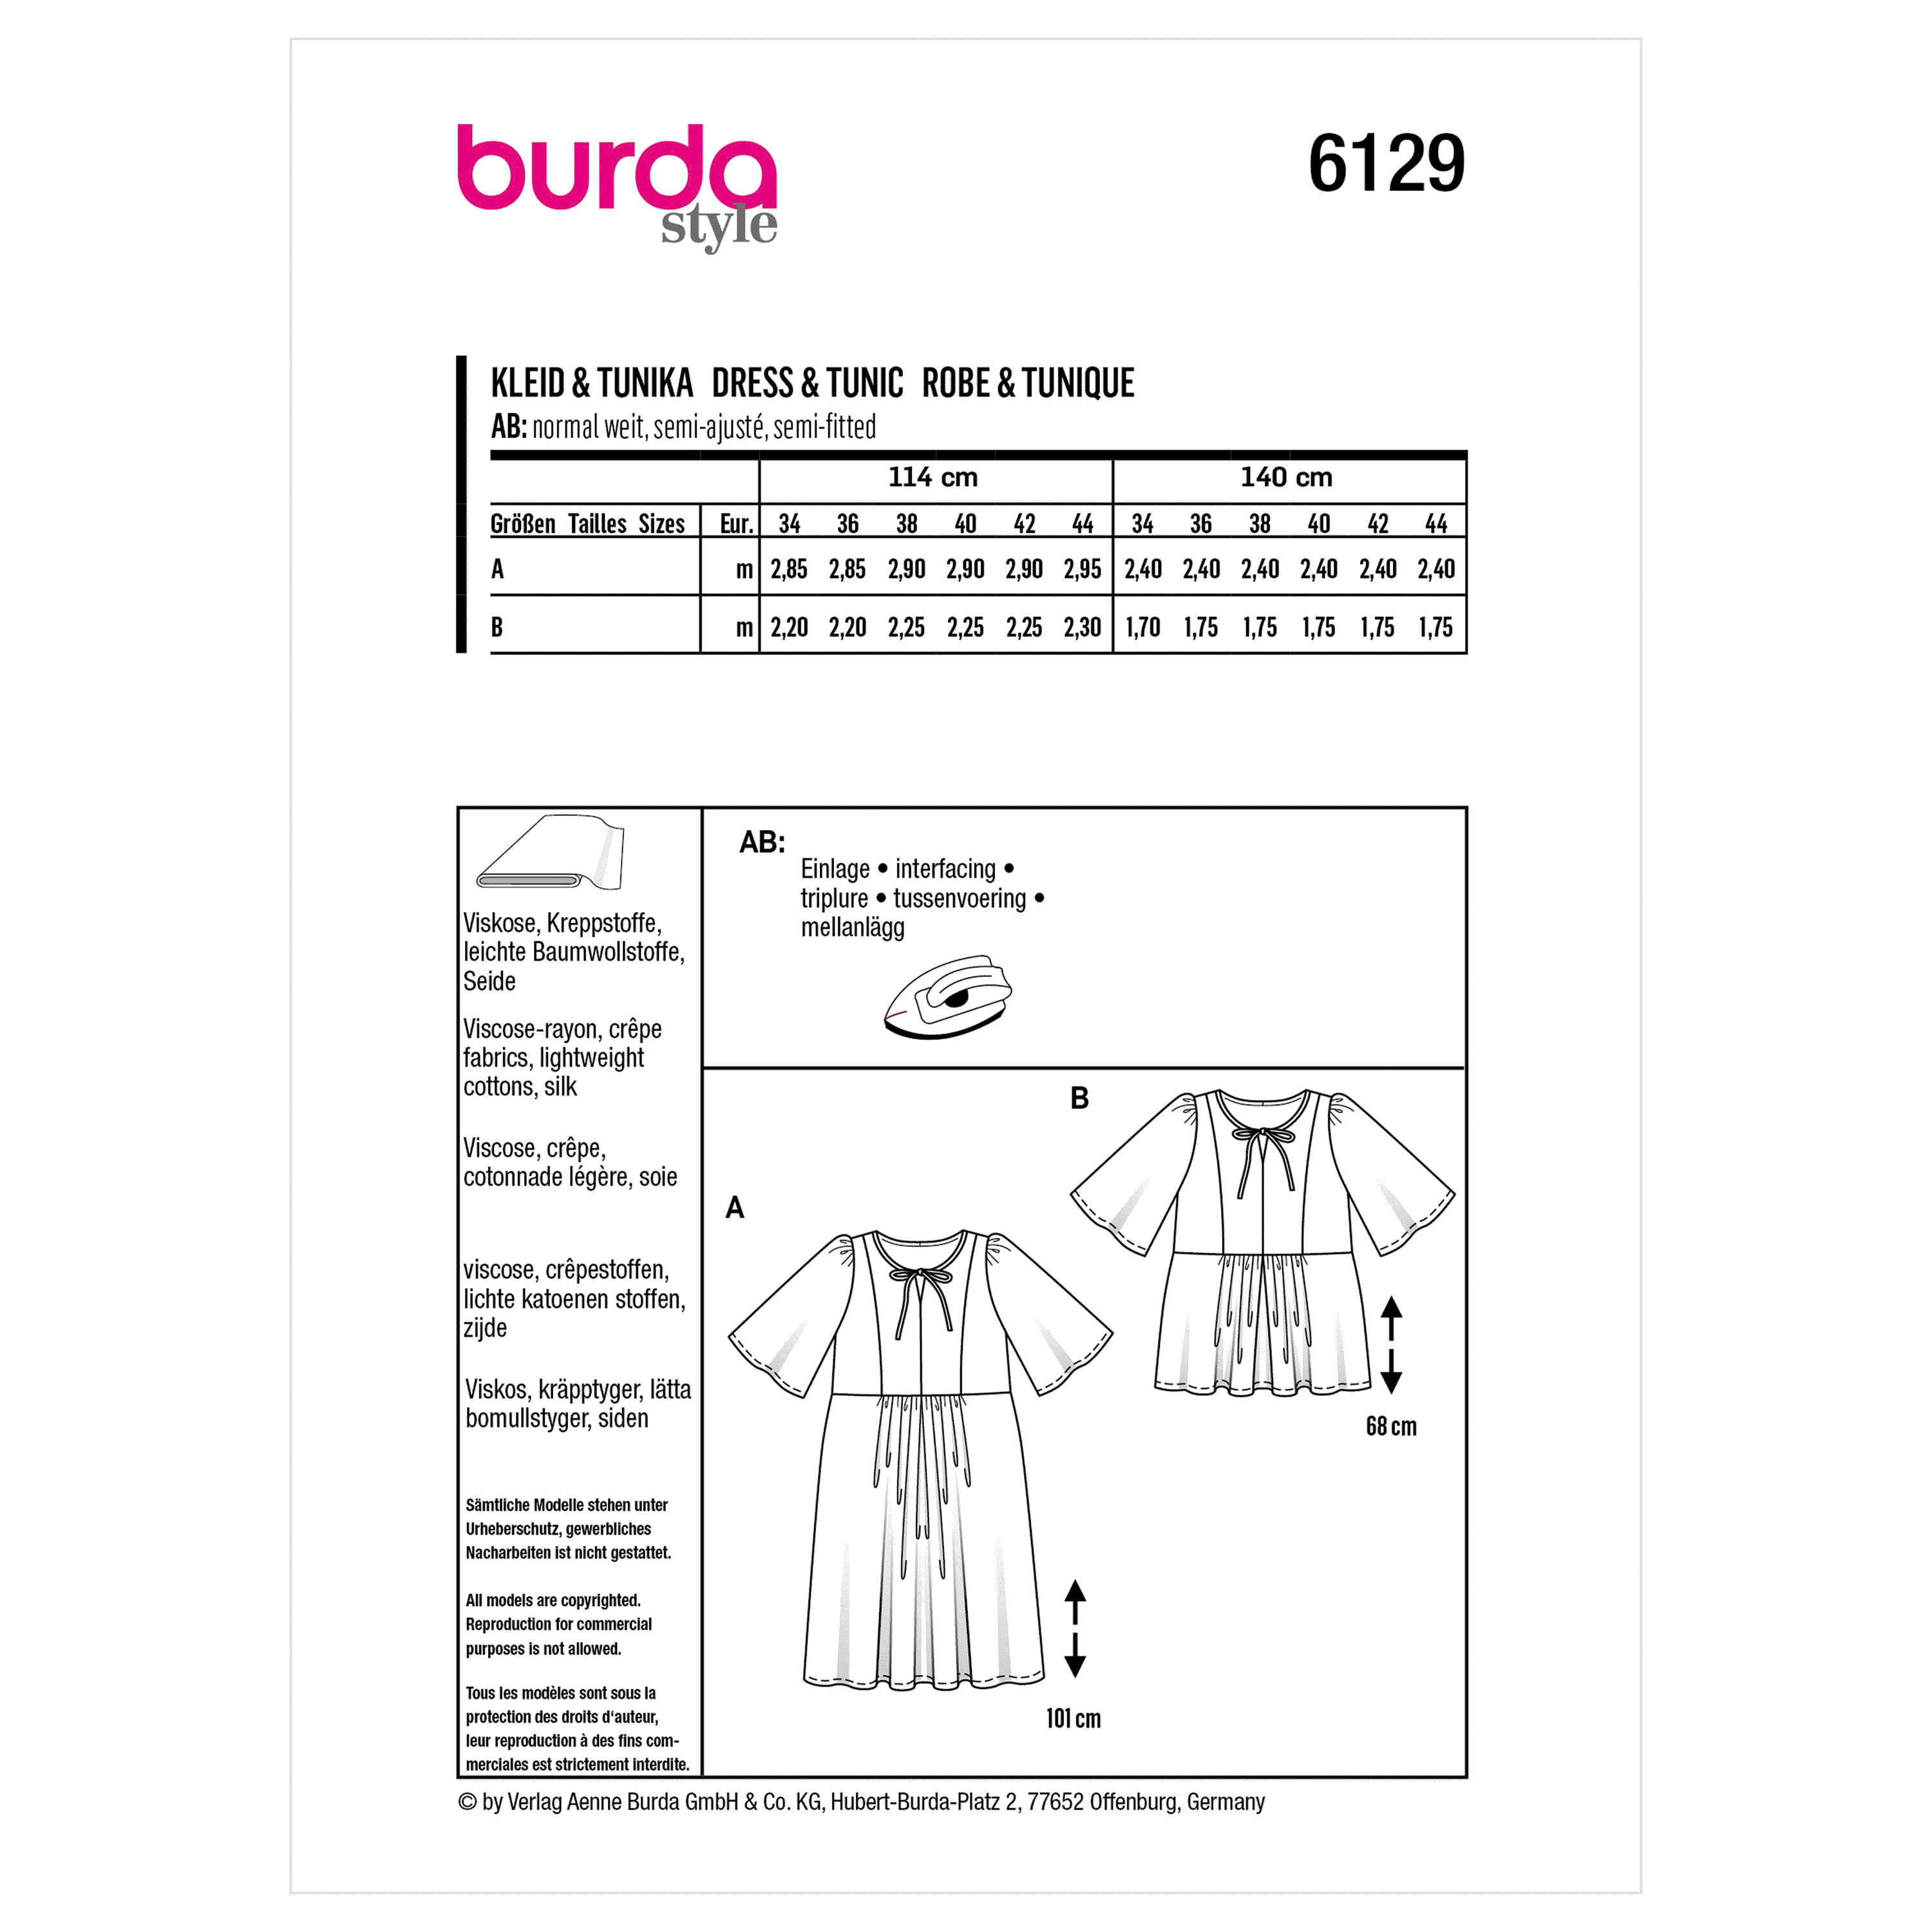 Burda Sewing Pattern 6129 Dress from Jaycotts Sewing Supplies